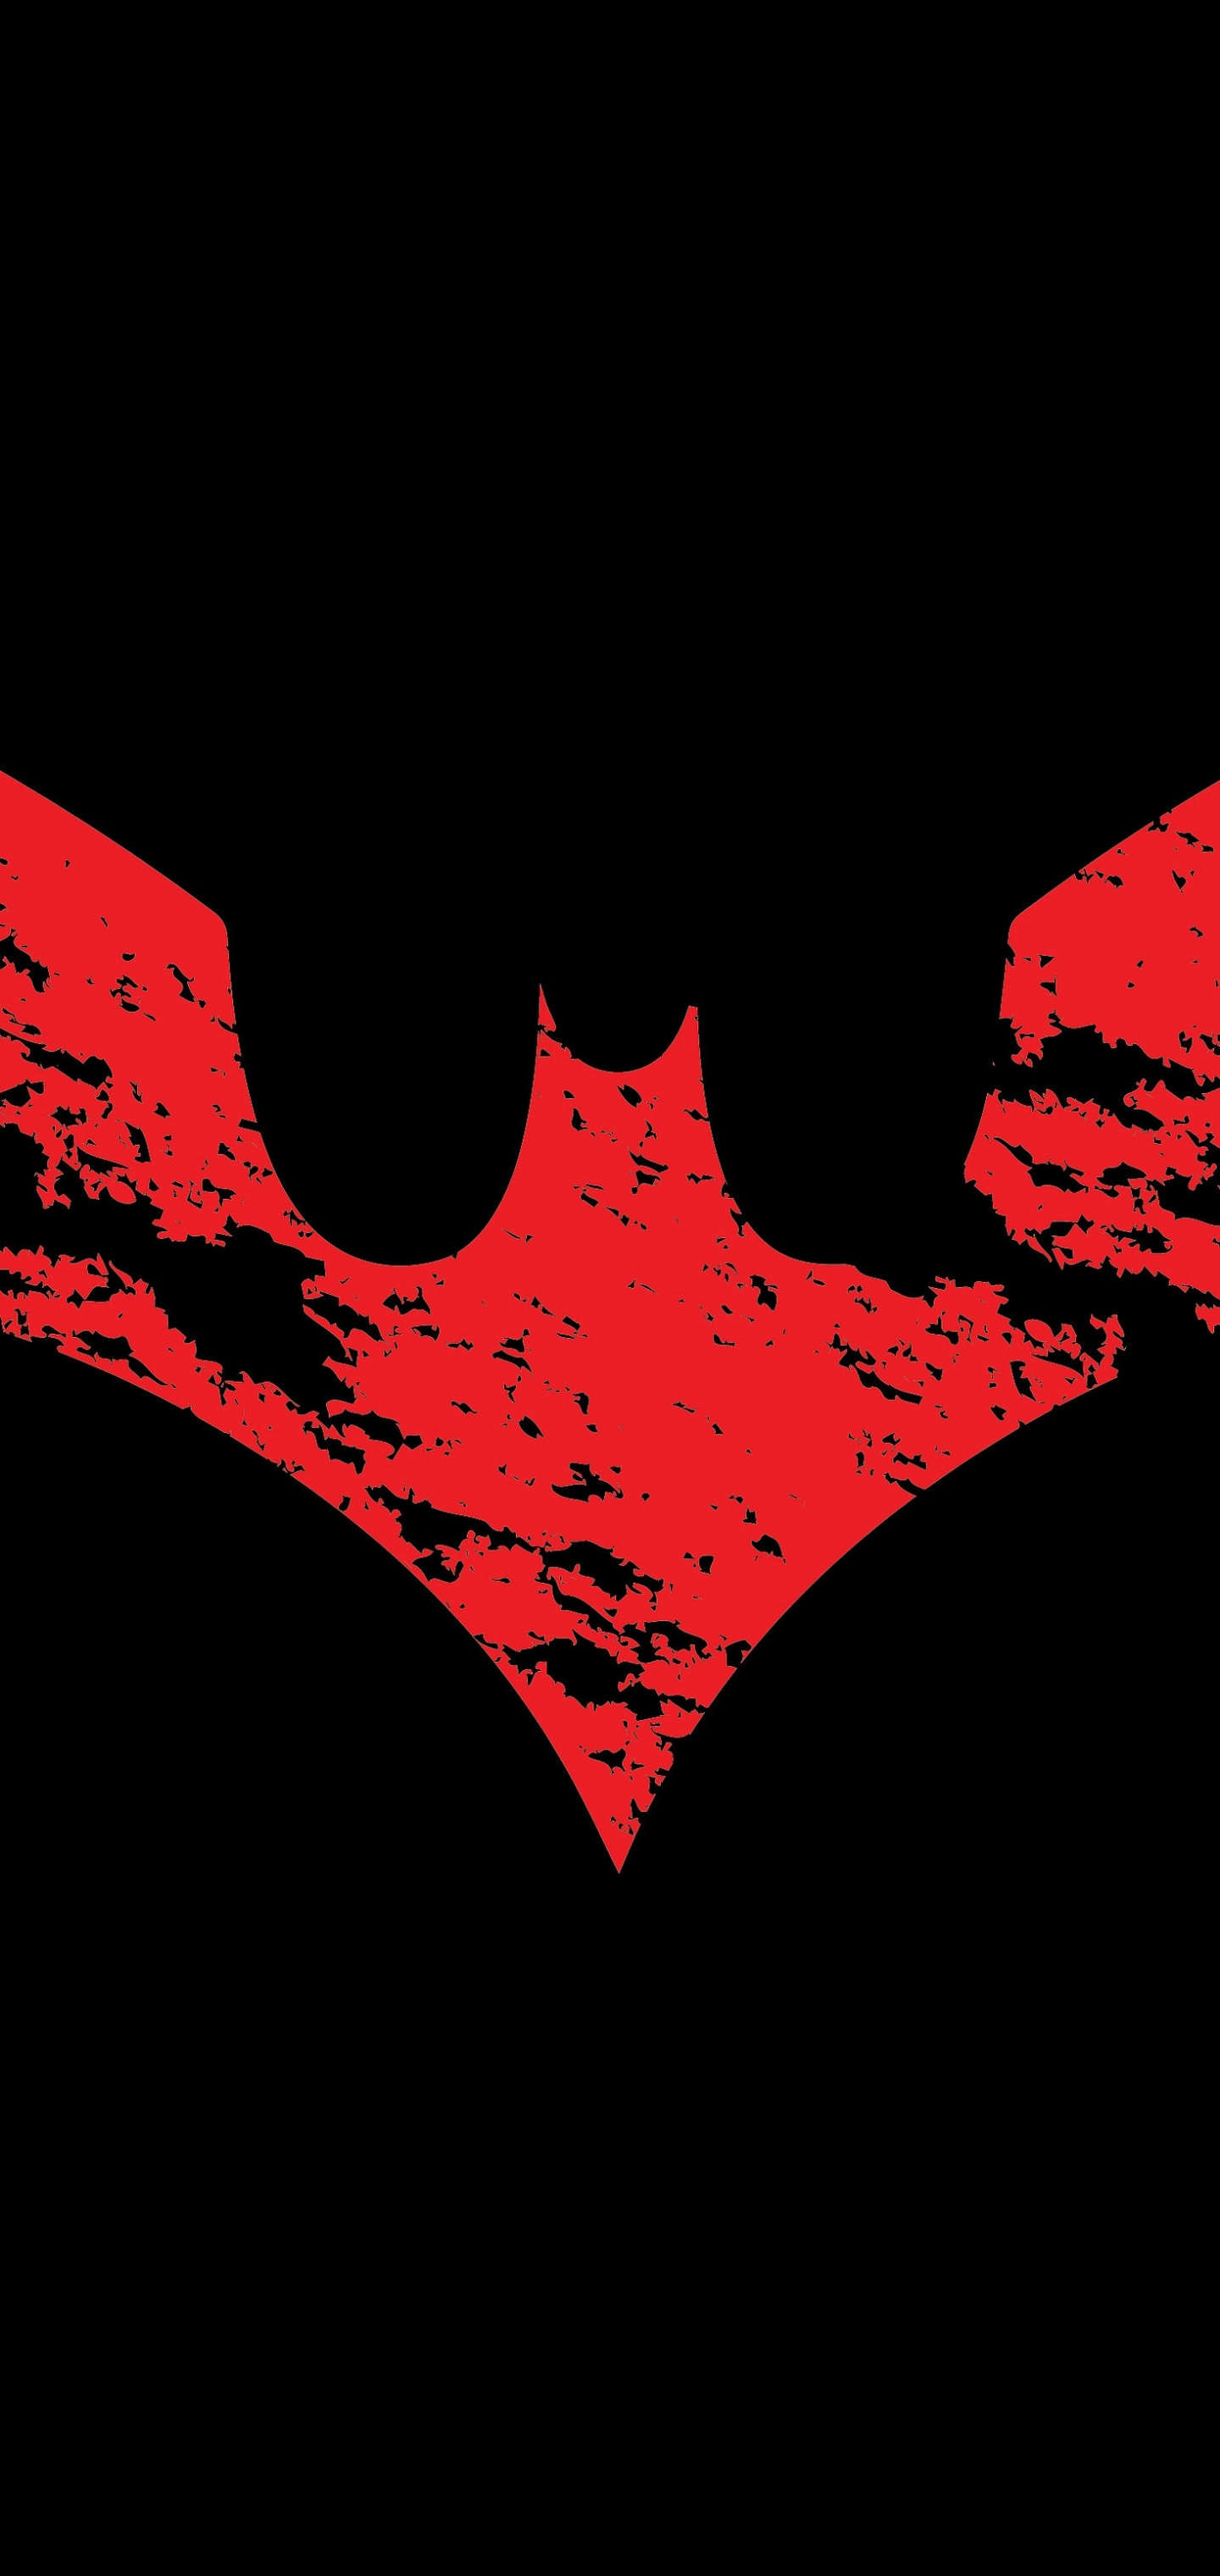 Скачать обои бесплатно Комиксы, Бэтмен, Логотип Бэтмена, Символ Бэтмена, Бэтмен Будущего картинка на рабочий стол ПК